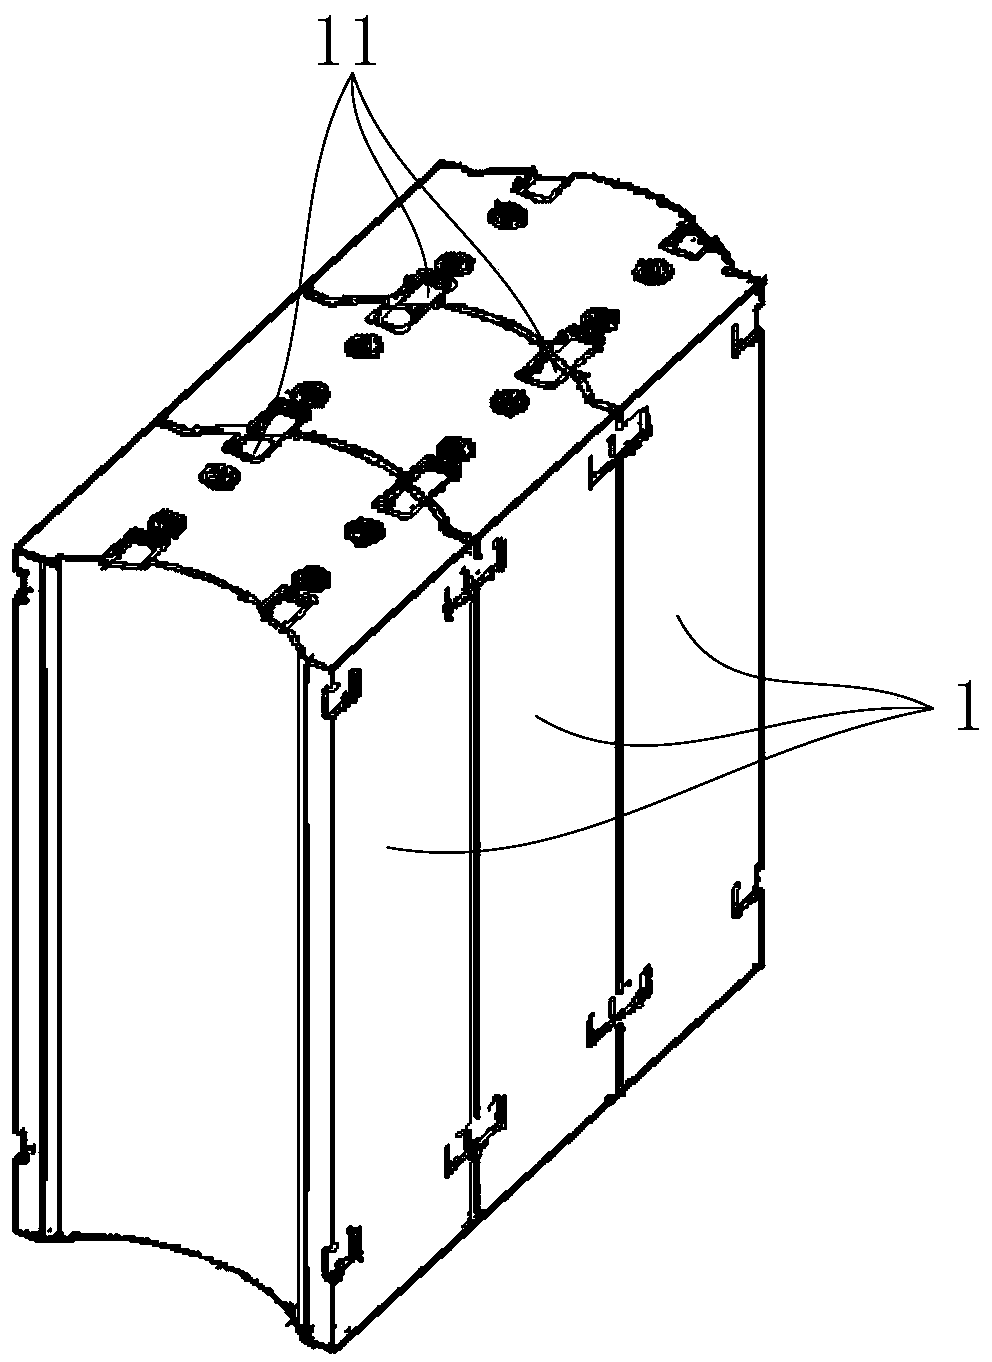 Anti-radiation concrete enclosure system and construction method of enclosure system